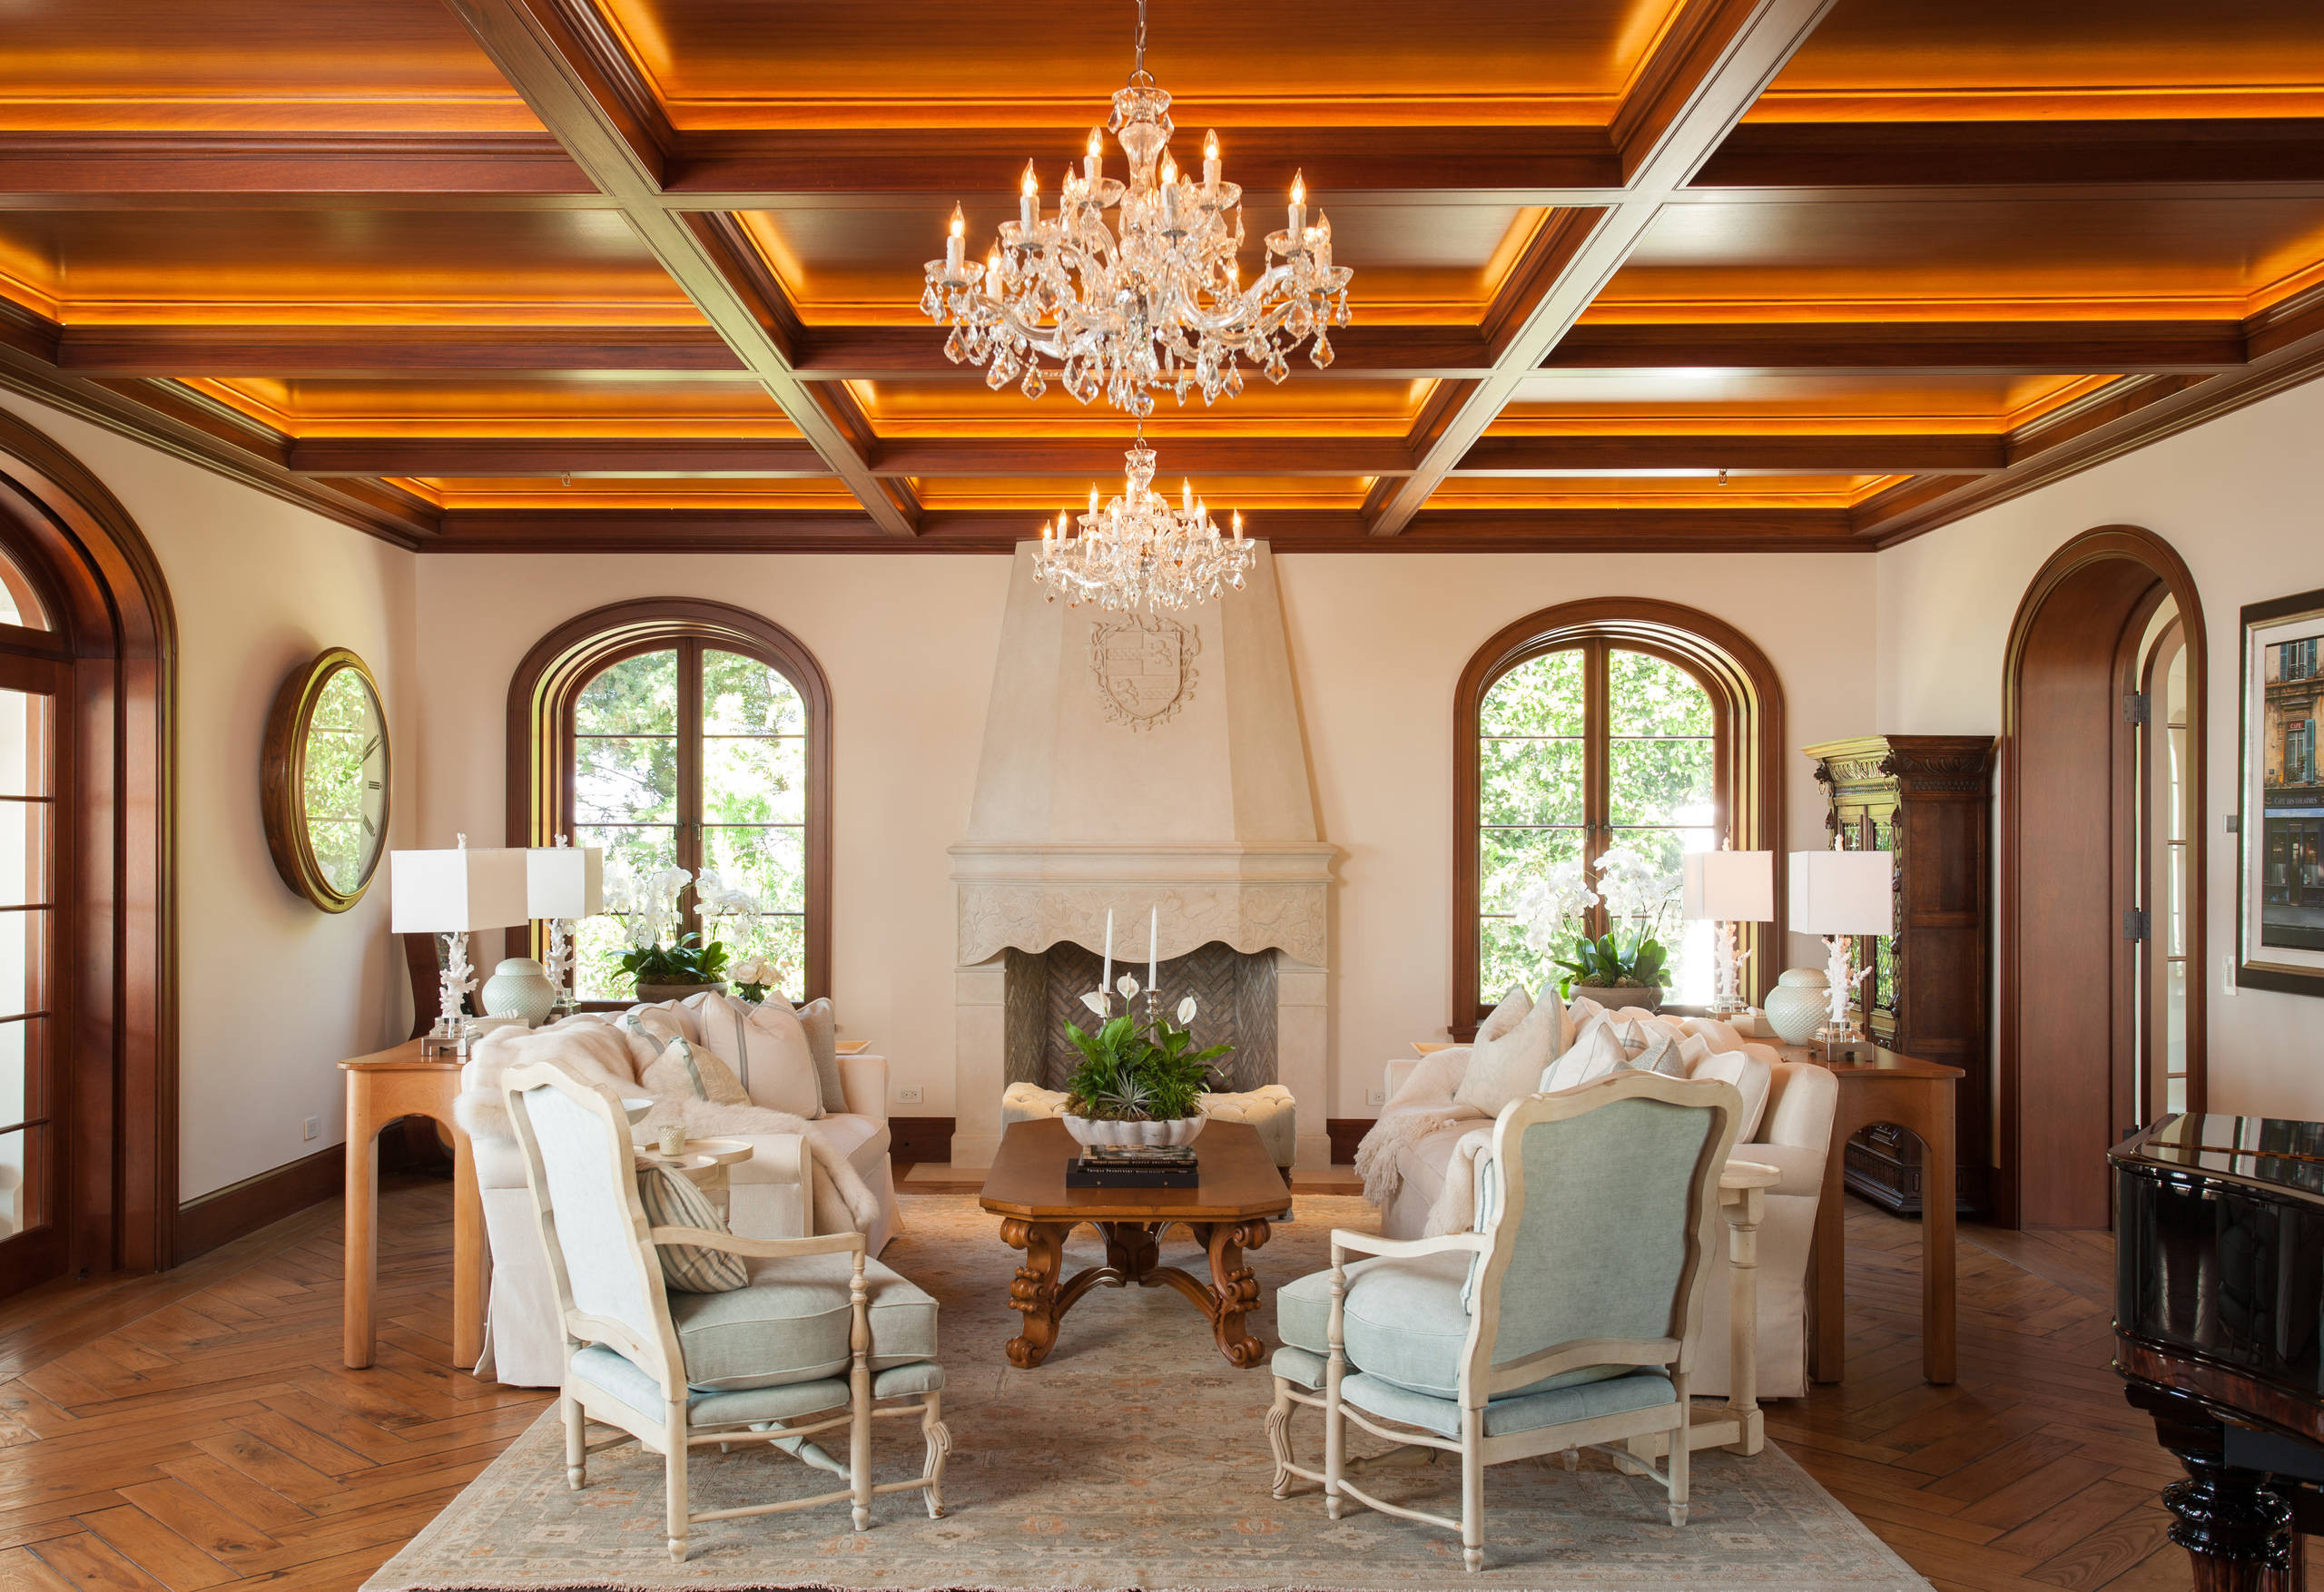 Living Room Ideas Images
 15 Beautiful Mediterranean Living Room Designs You ll Love